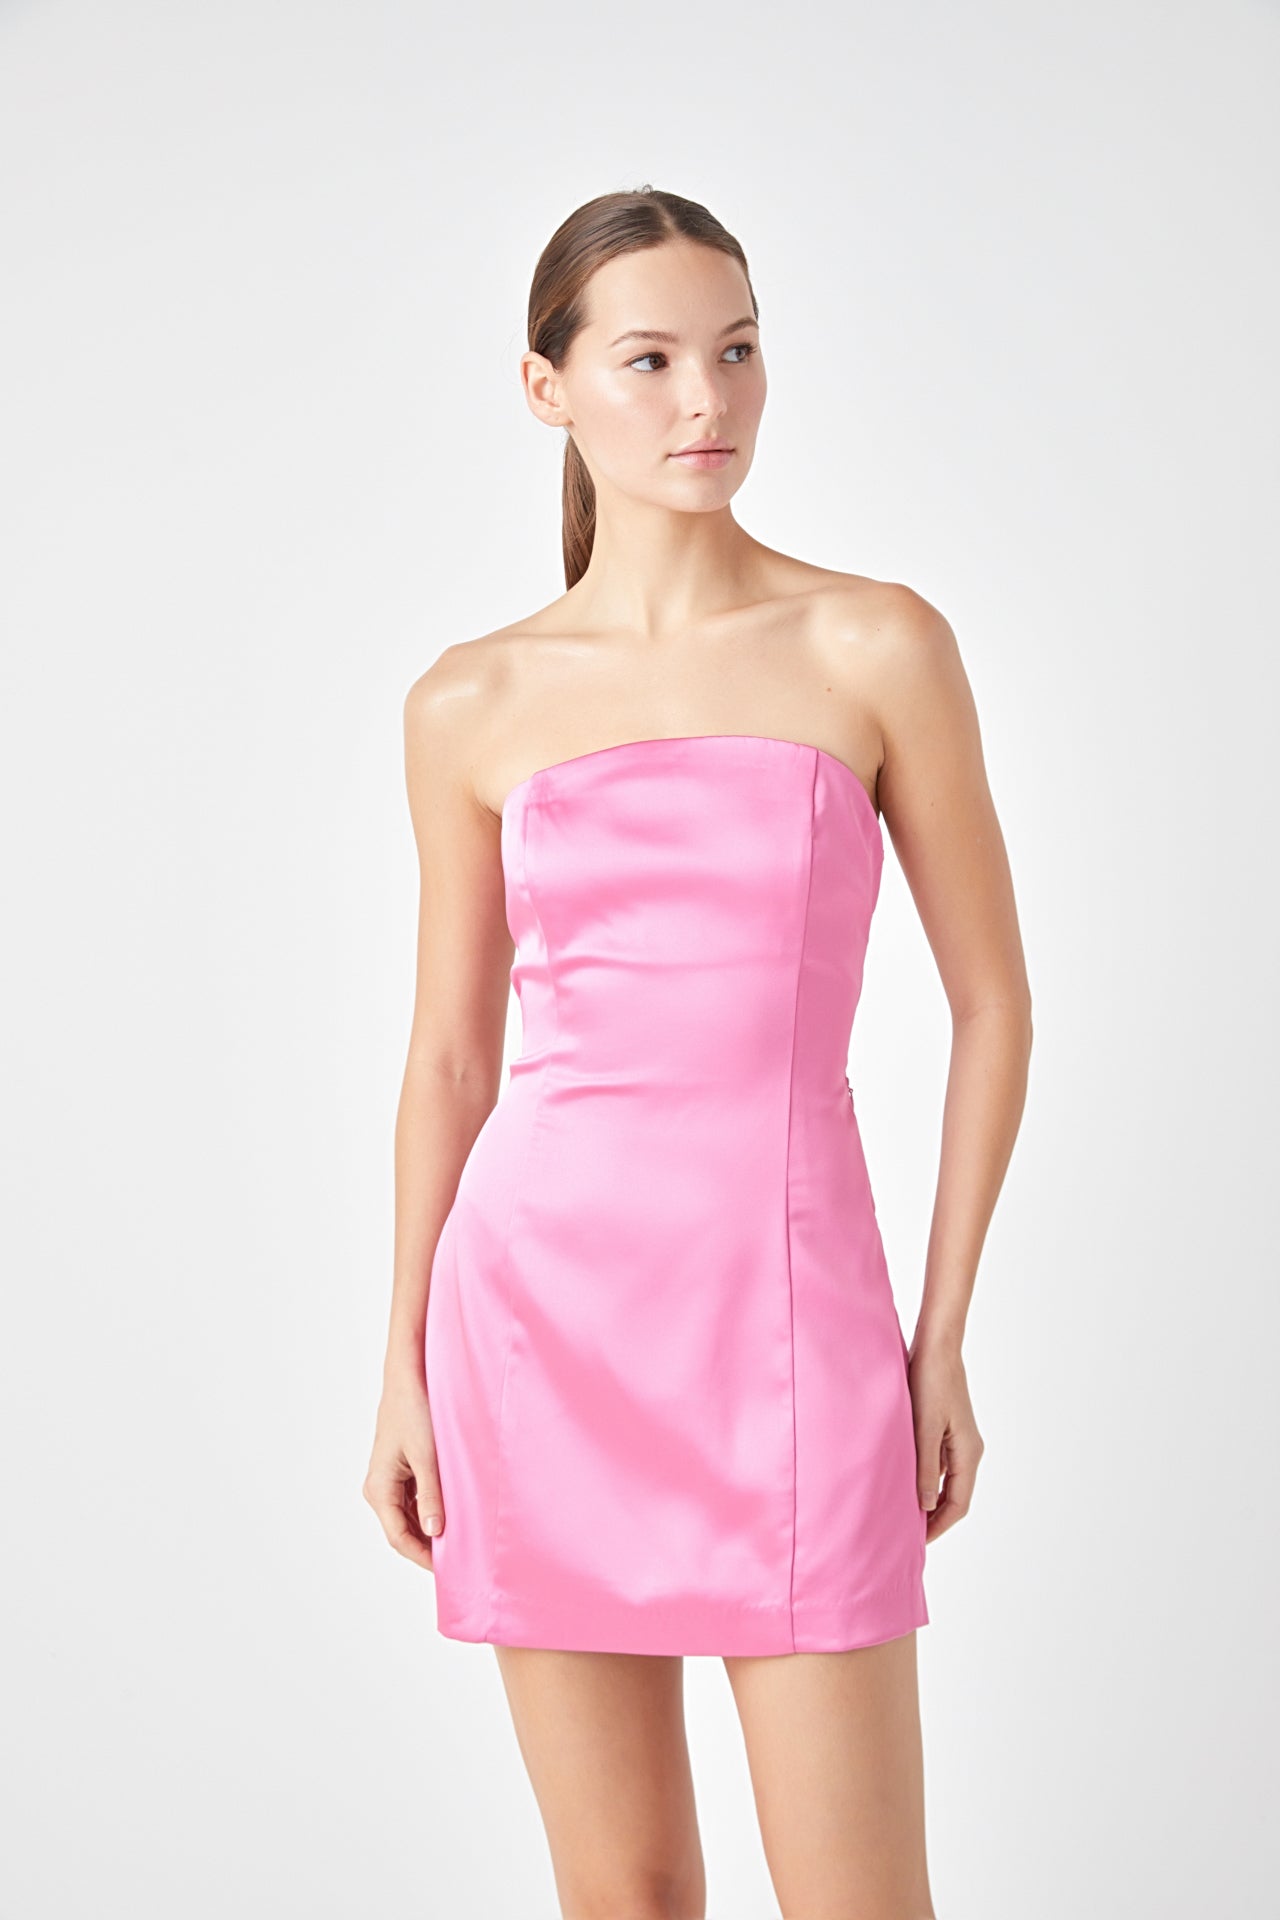 ENDLESS ROSE - Satin Cross Spaghetti Tie Mini Dress - DRESSES available at Objectrare